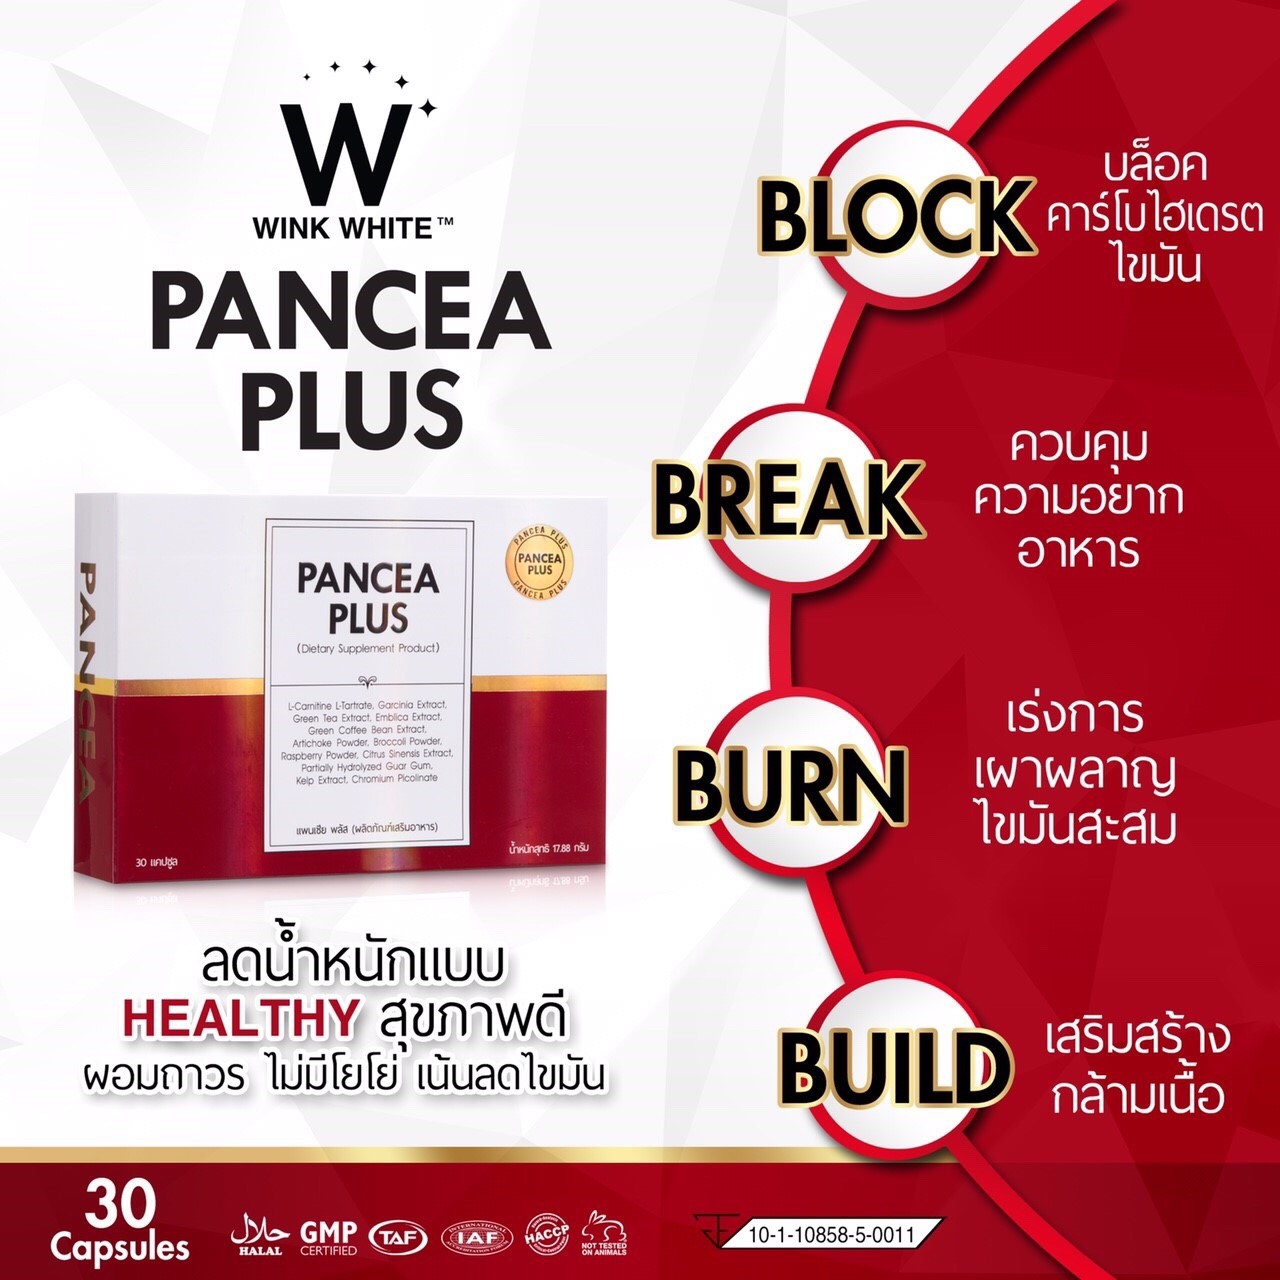 PANCEA PLUS (PANACEA SLIM) WINK WHITE WEIGHT LOSS